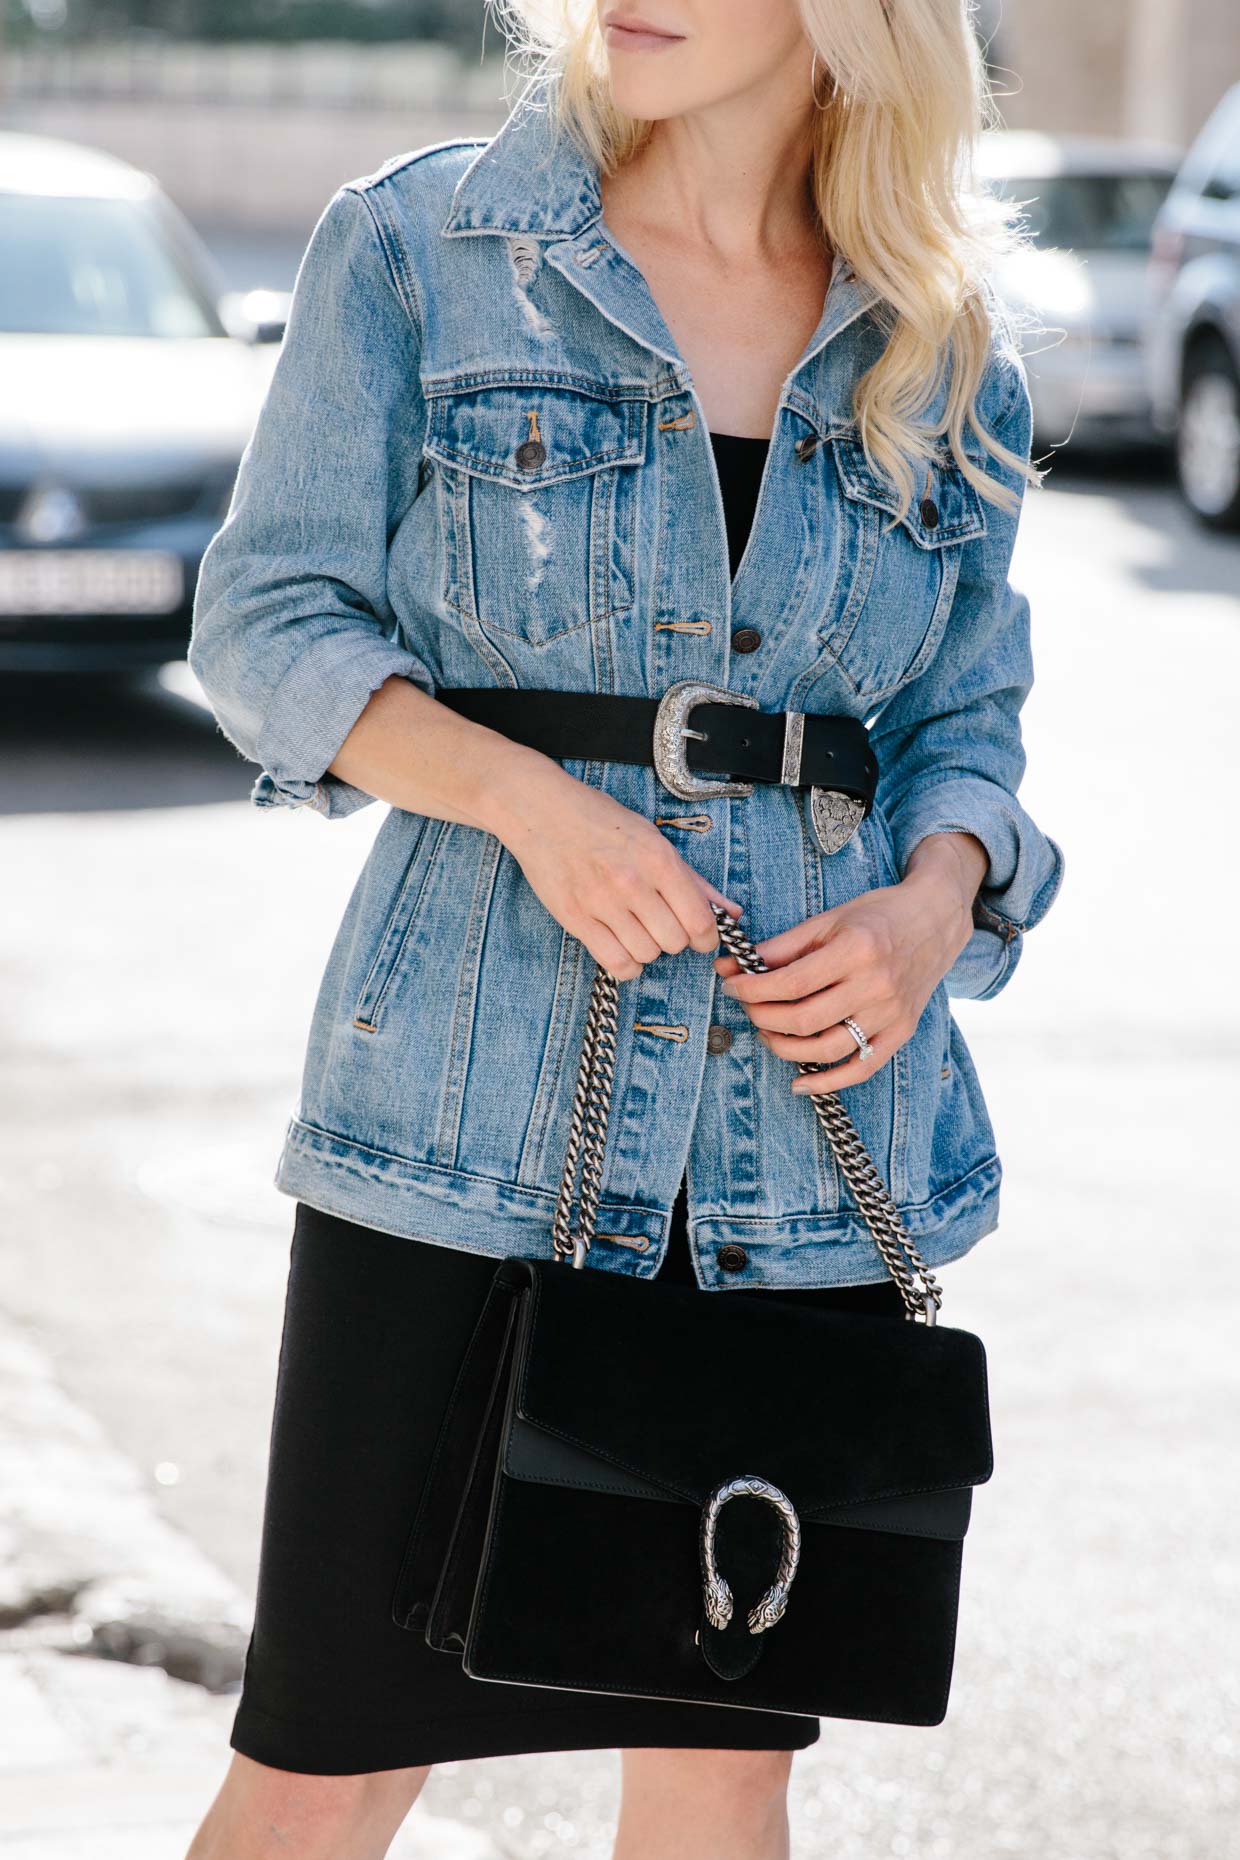 A Chic Way to Wear Your Western Belt - Meagan's Moda